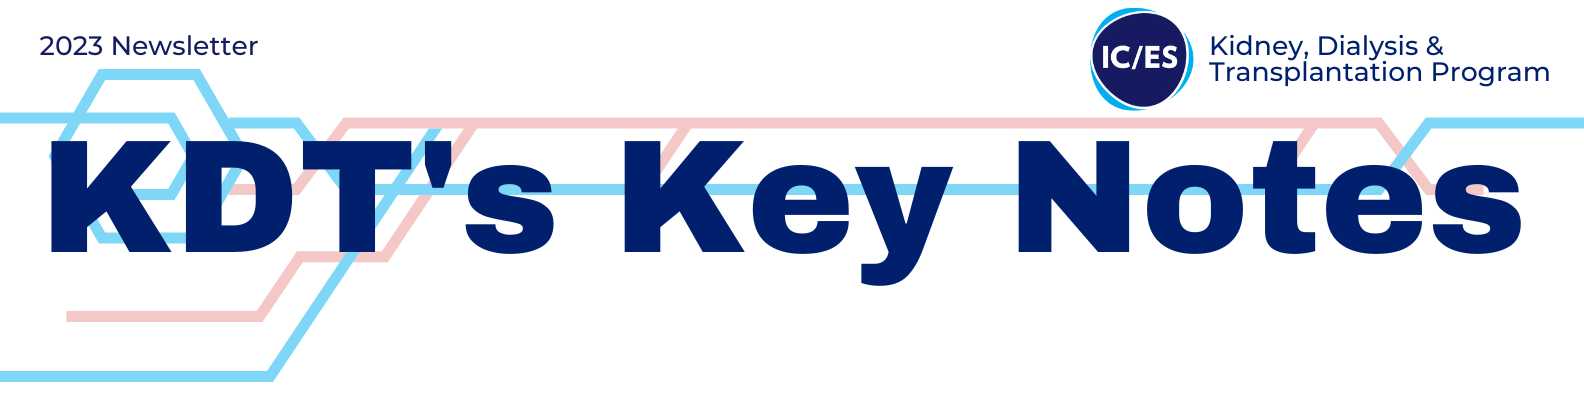 KDT's Key Notes 2023 Newsletter for the ICES Kidney, Dialysis, & Transplantation Program